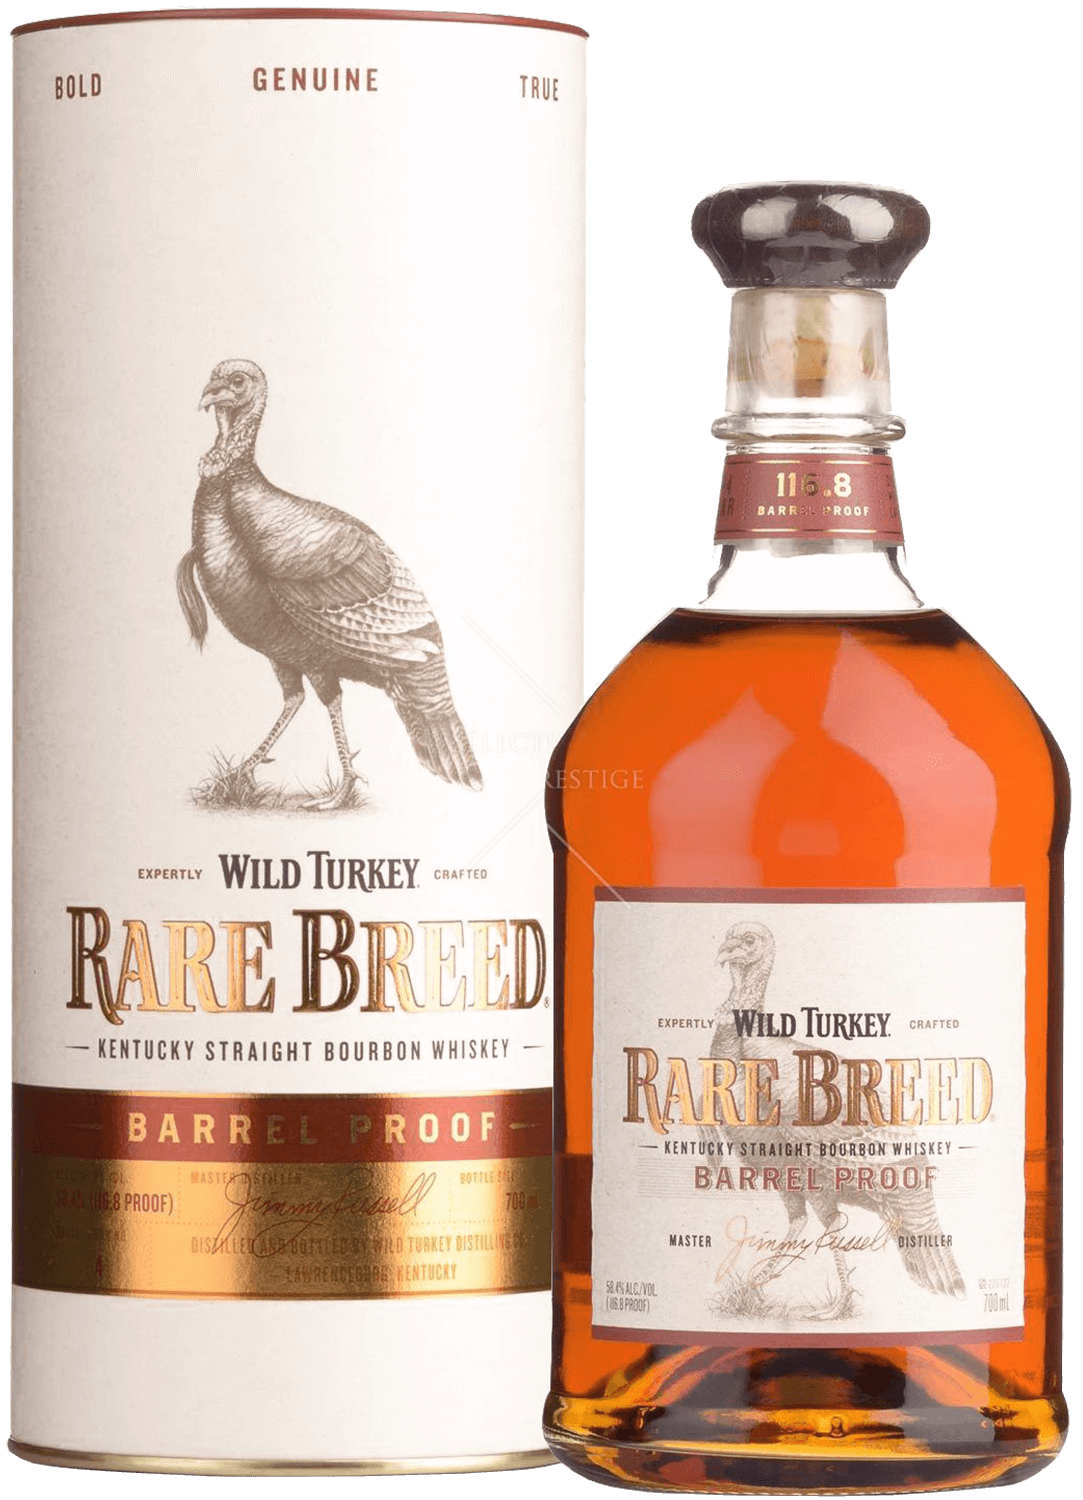 Wild Turkey Rare Breed Kentucky Straight Bourbon Whiskey (gift box) jefferson’s kentucky straight bourbon whiskey